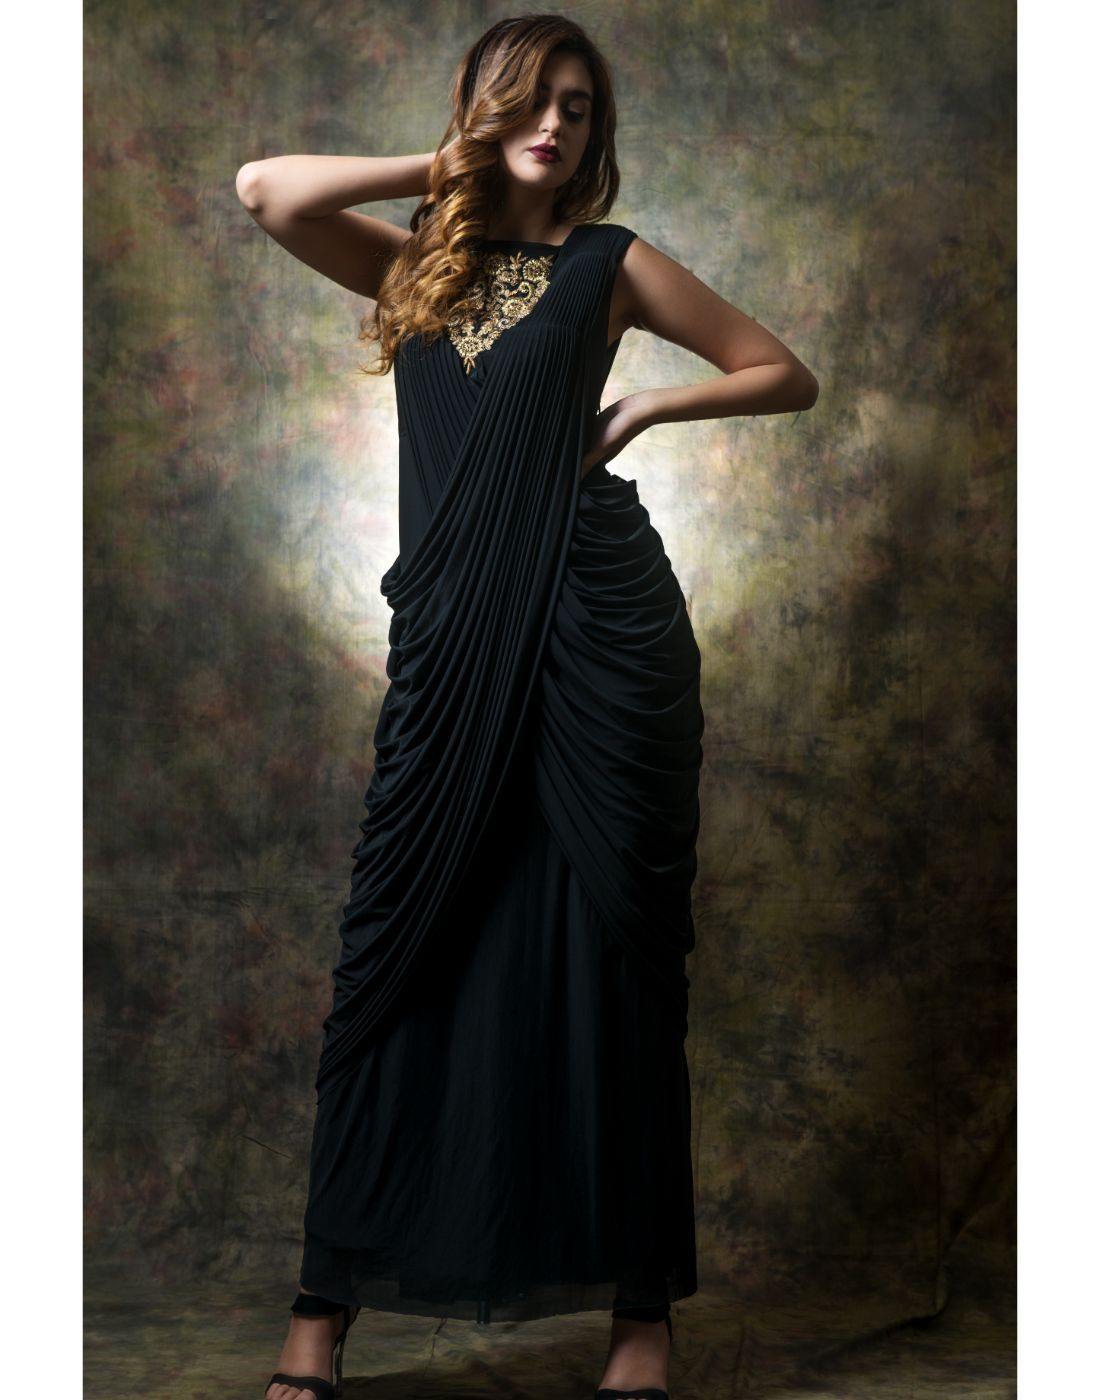 One Shoulder Elegant Black Front Split Evening Dress Online With Sleeveless  | Ballbellas | Black dresses classy, Unique prom dresses, Prom outfits